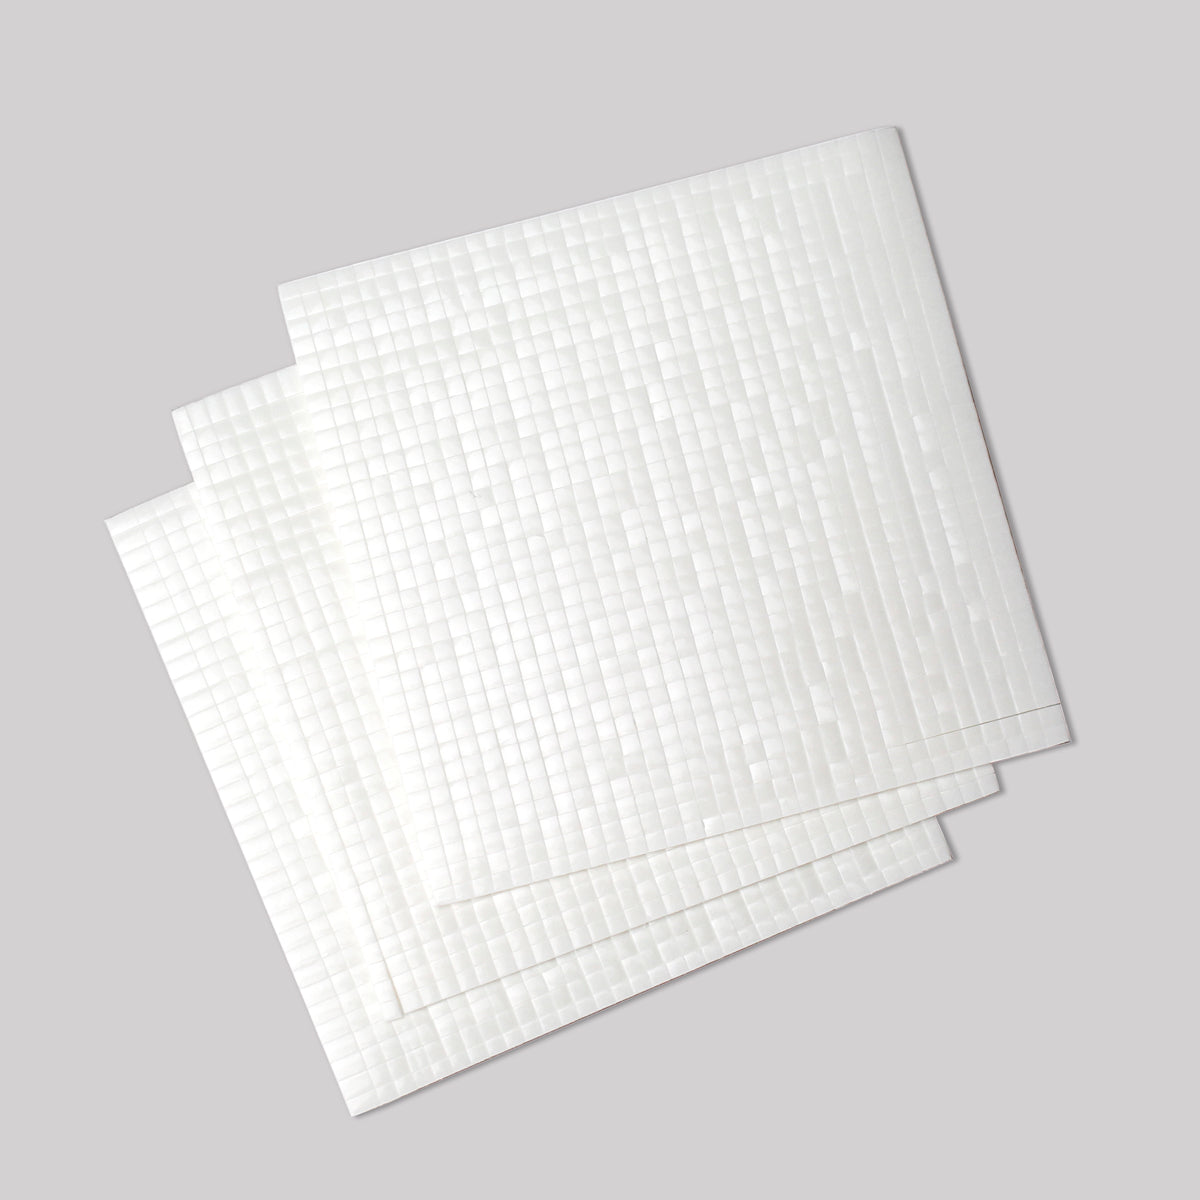 3 x 3 mm doppelseitige Klebepads – Weiß 2 mm, 3er-Pack